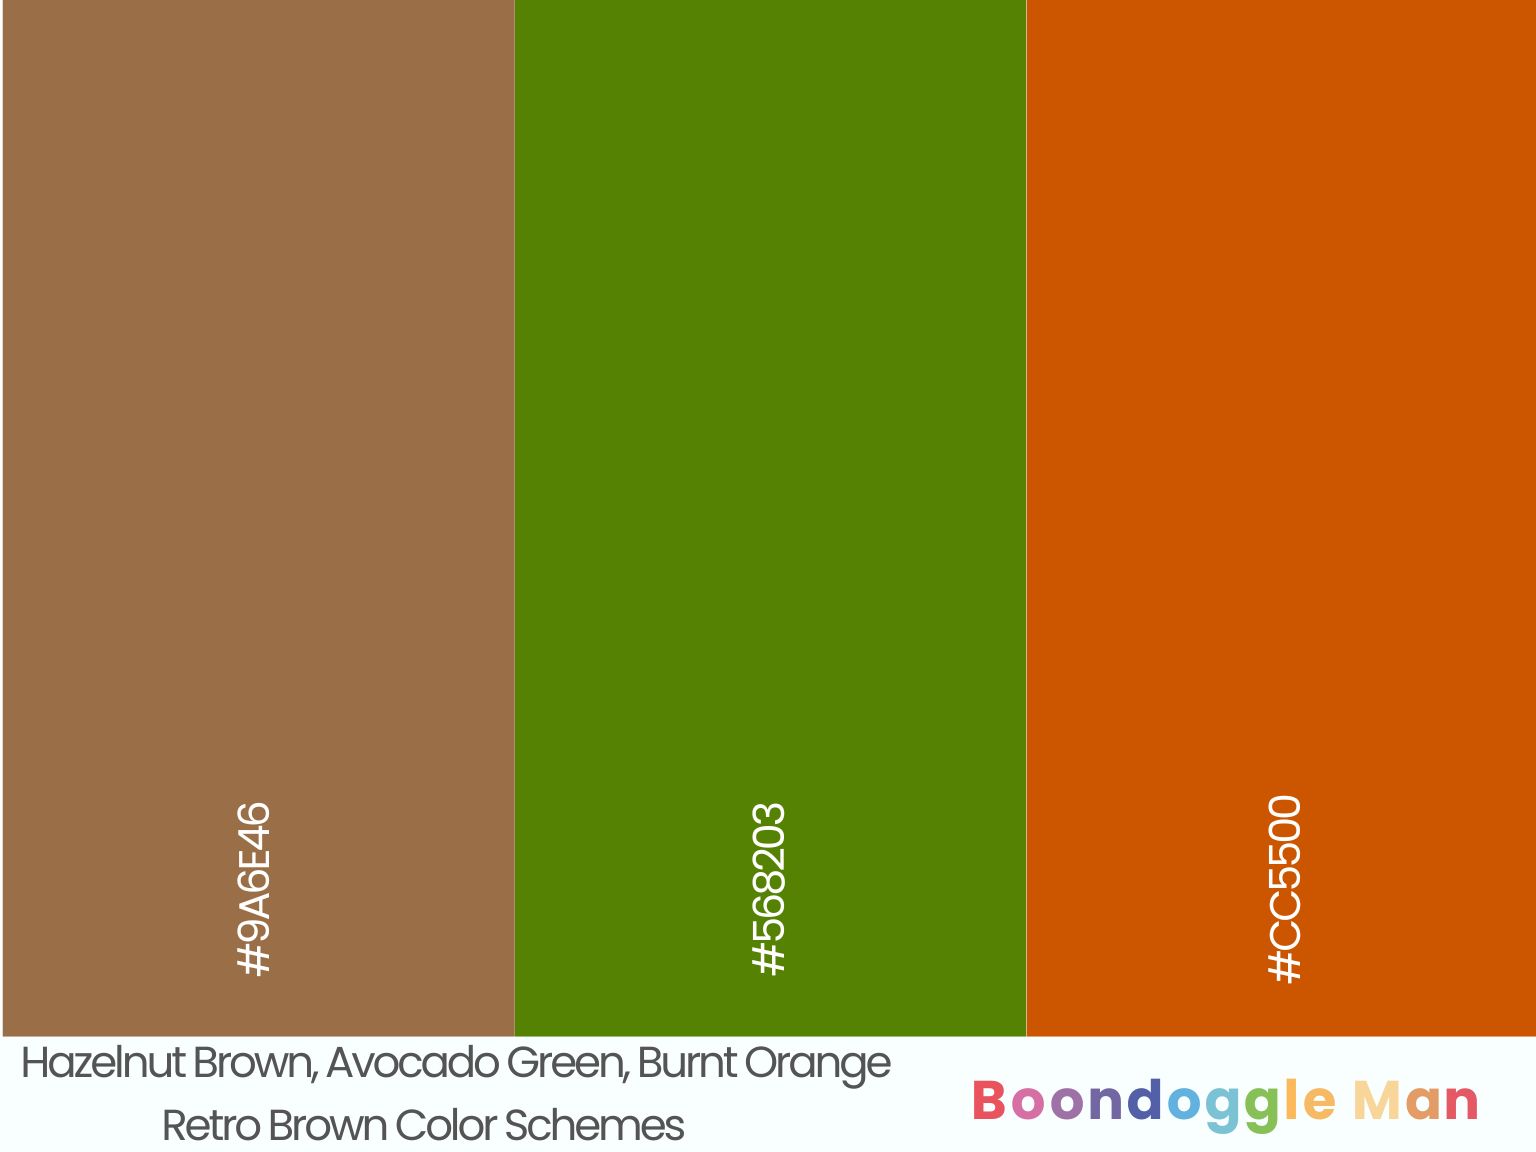 Hazelnut Brown, Avocado Green, Burnt Orange